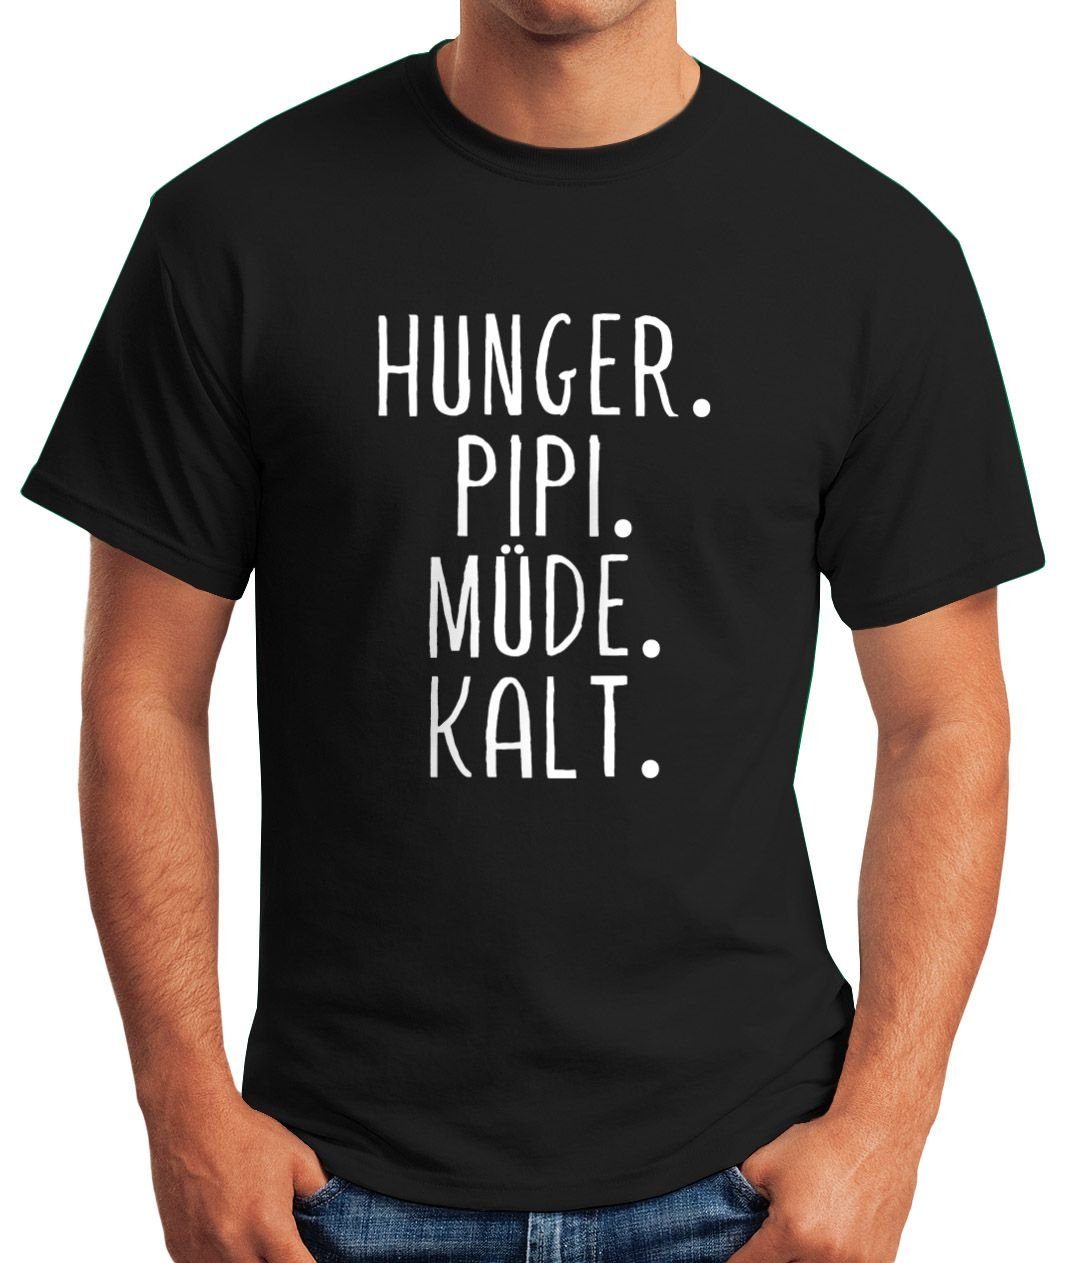 mit Moonworks® Kalt. T-Shirt Hunger! Spruch Fun-Shirt Print lustiges Herren MoonWorks Print-Shirt Müde, Hunger, Pipi,